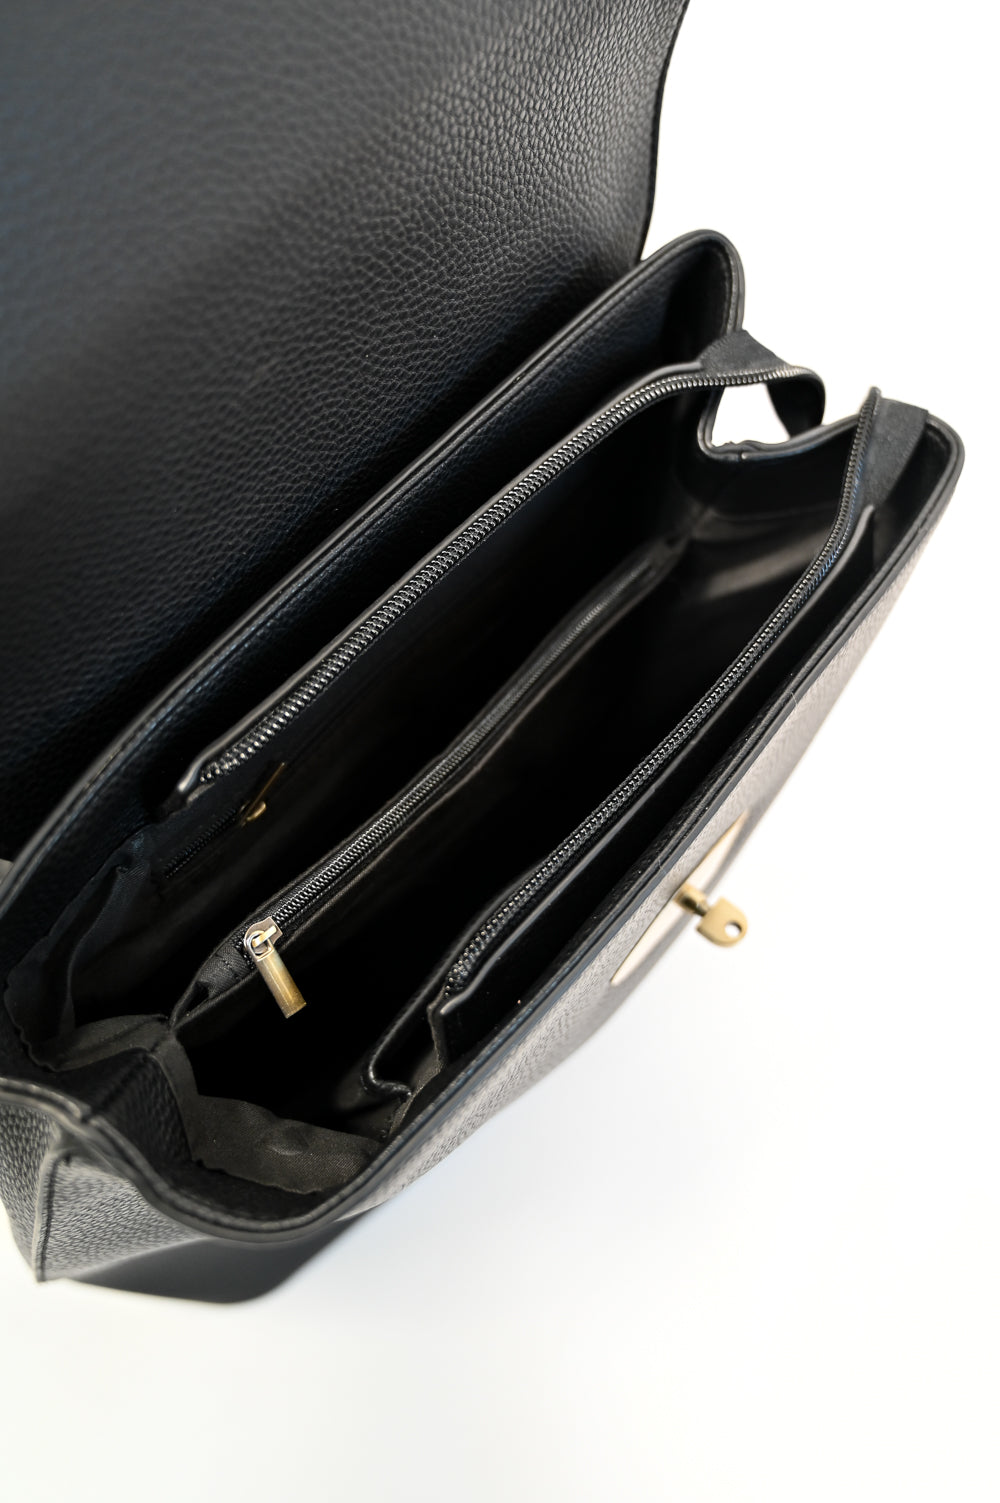 PU Leather Smart Backpack